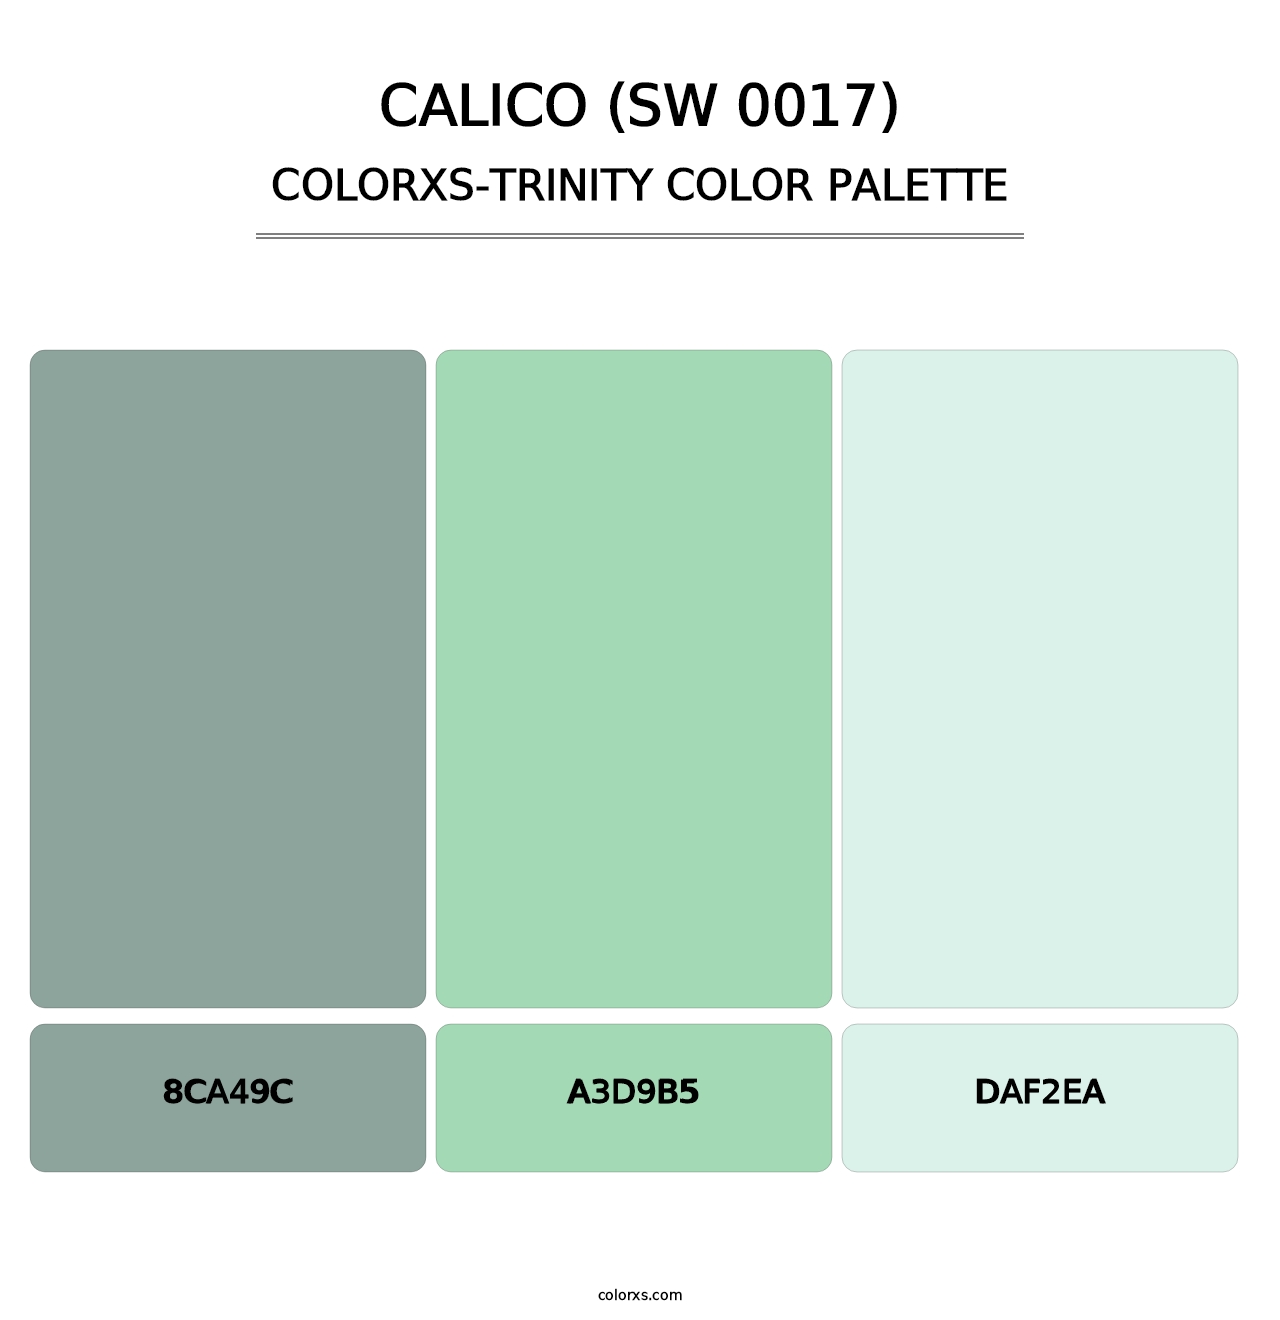 Calico (SW 0017) - Colorxs Trinity Palette